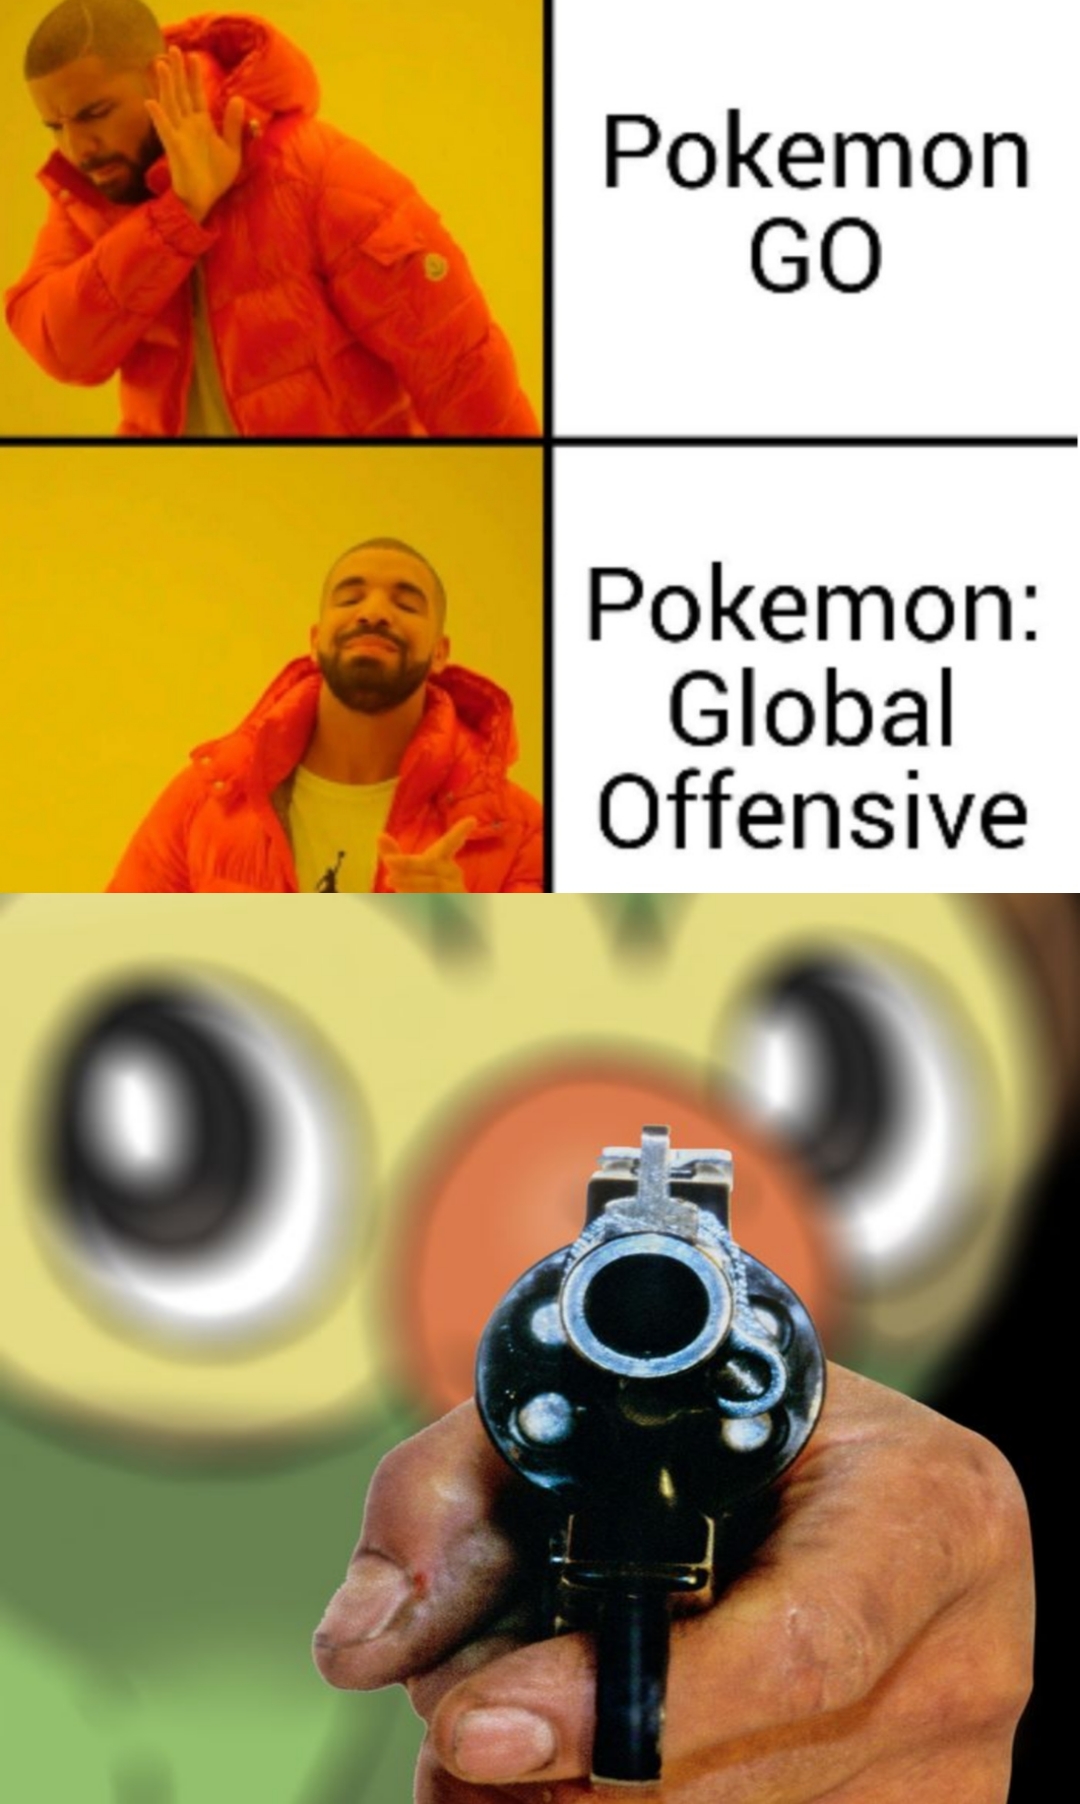 losing no nut november memes - Pokemon Go Pokemon Global Offensive